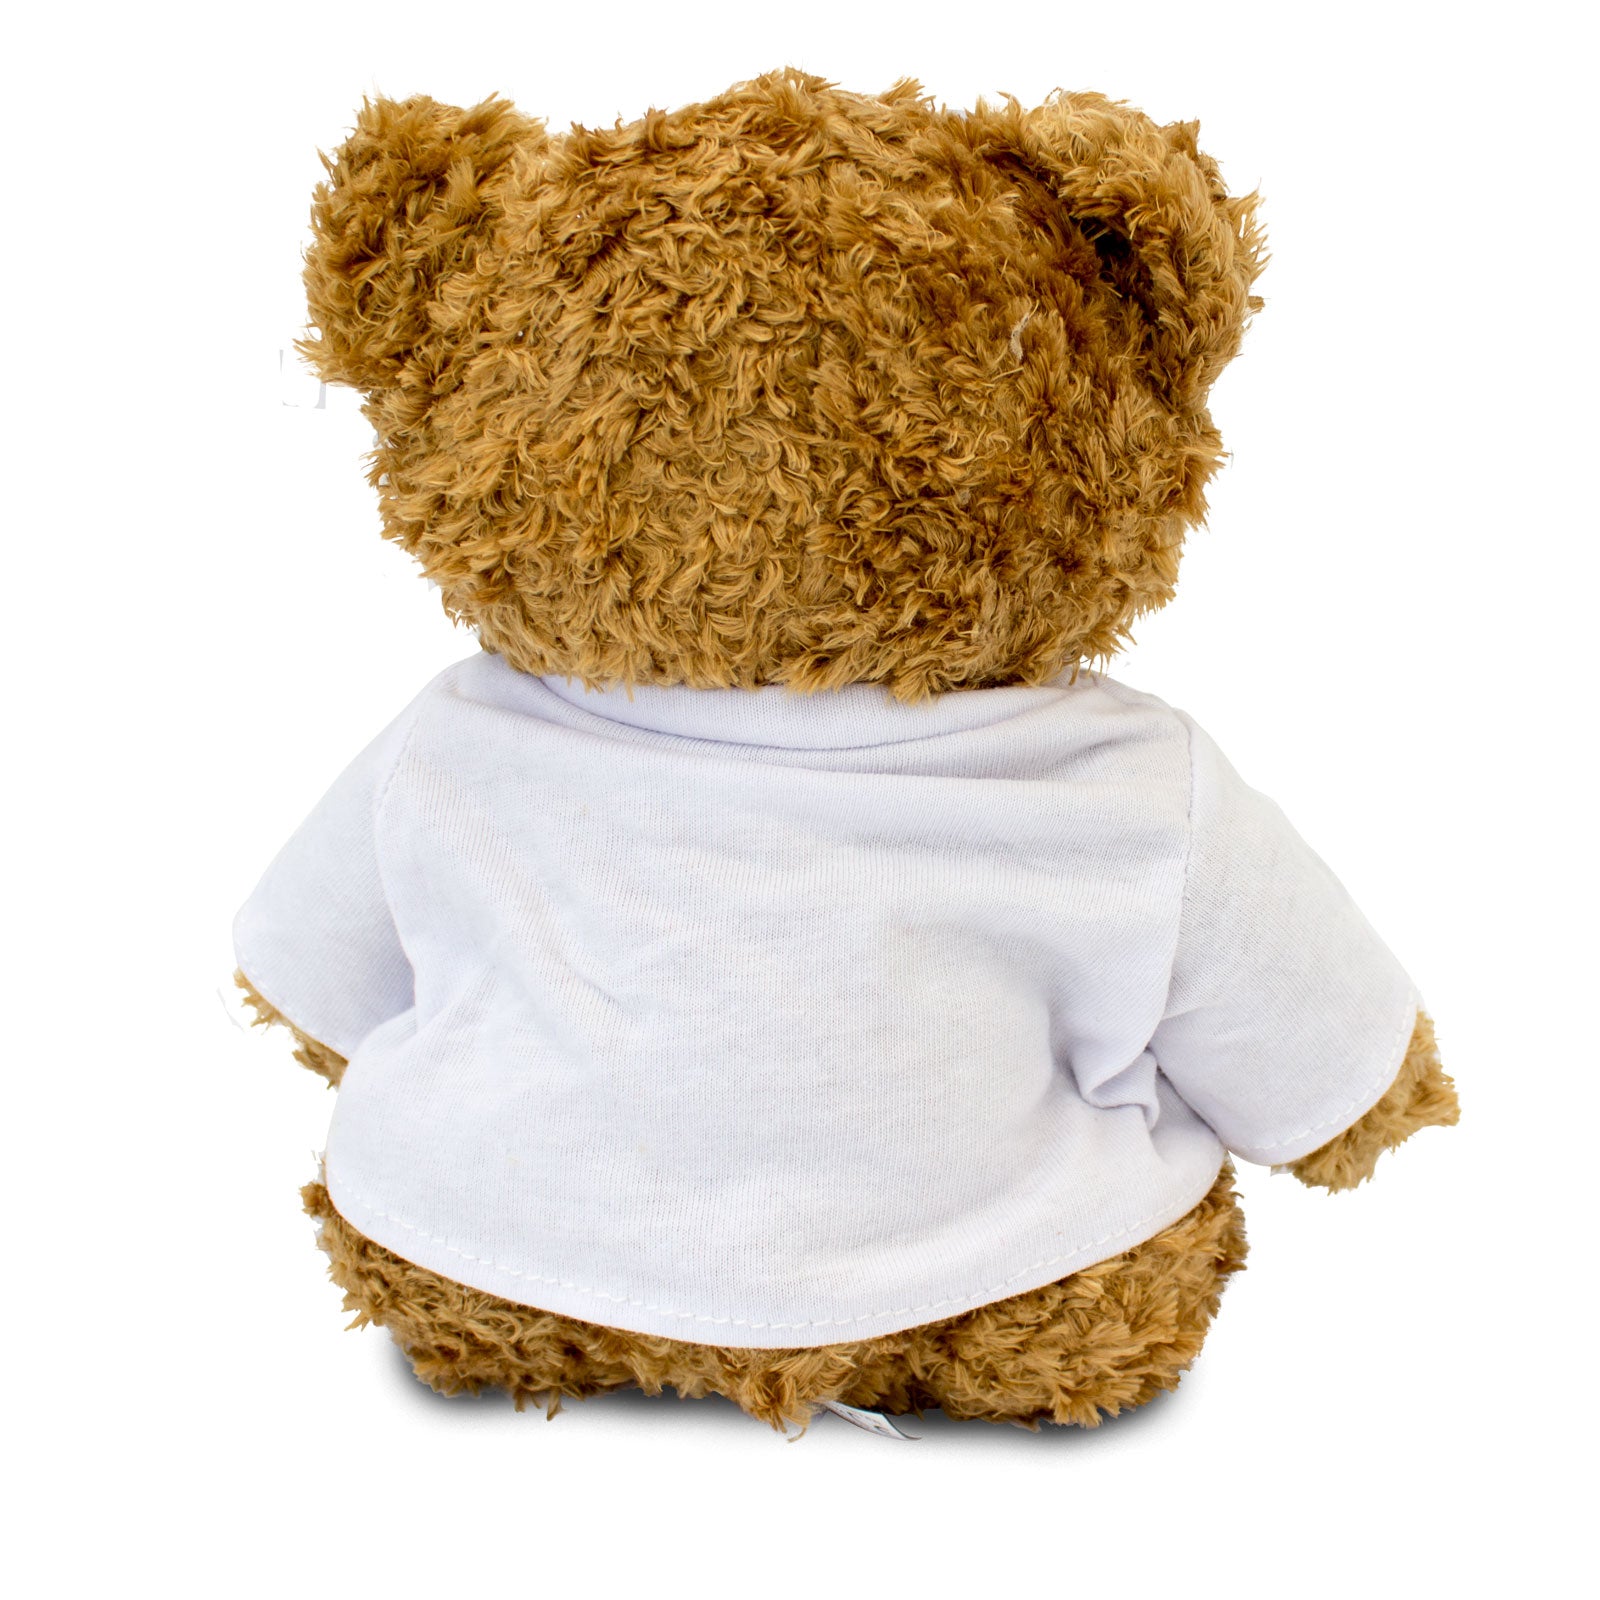 Get Well Soon Donovan - Teddy Bear